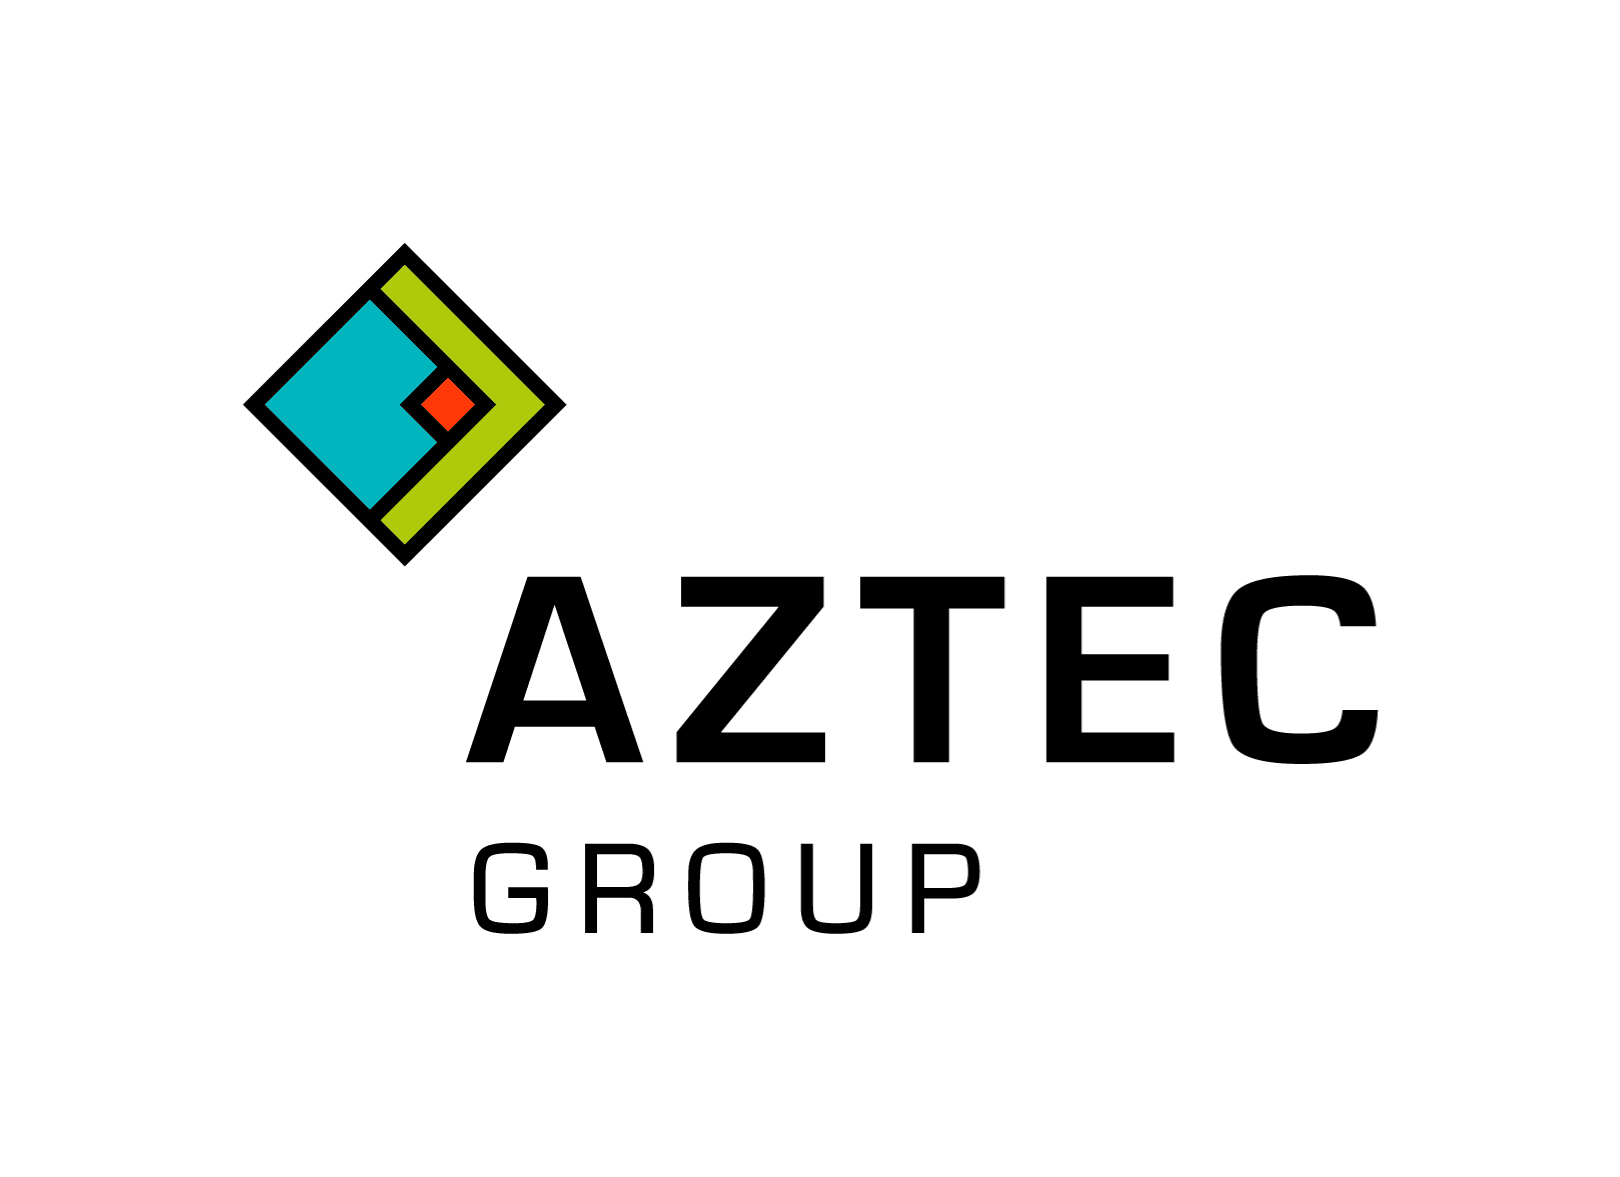 Aztec Group